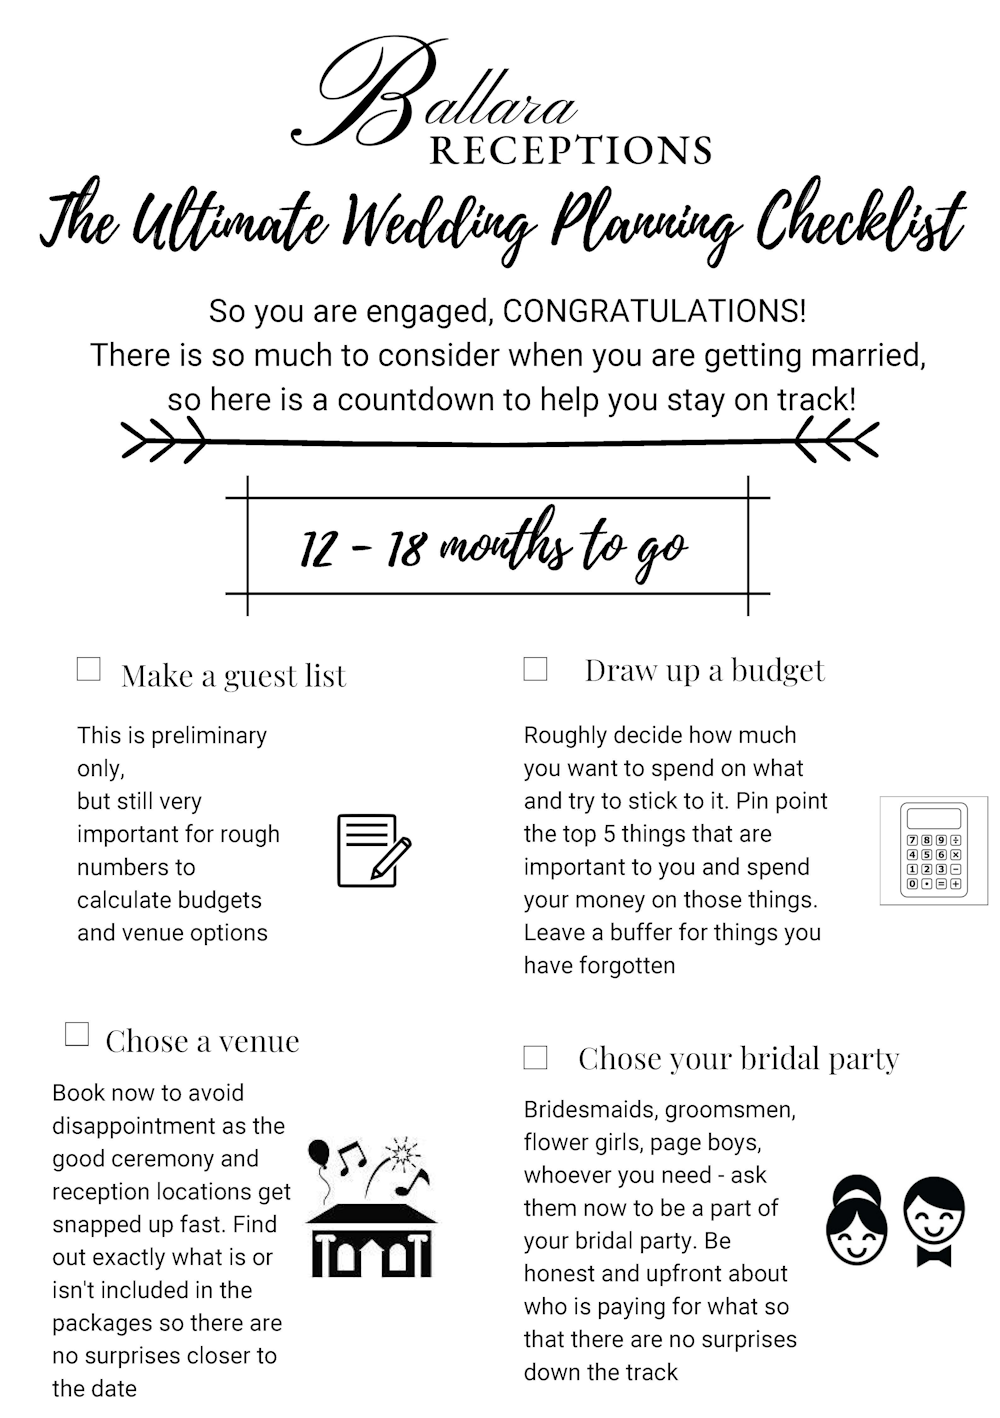 The Ultimate Wedding Planning Checklist Ballara Wedding Receptions